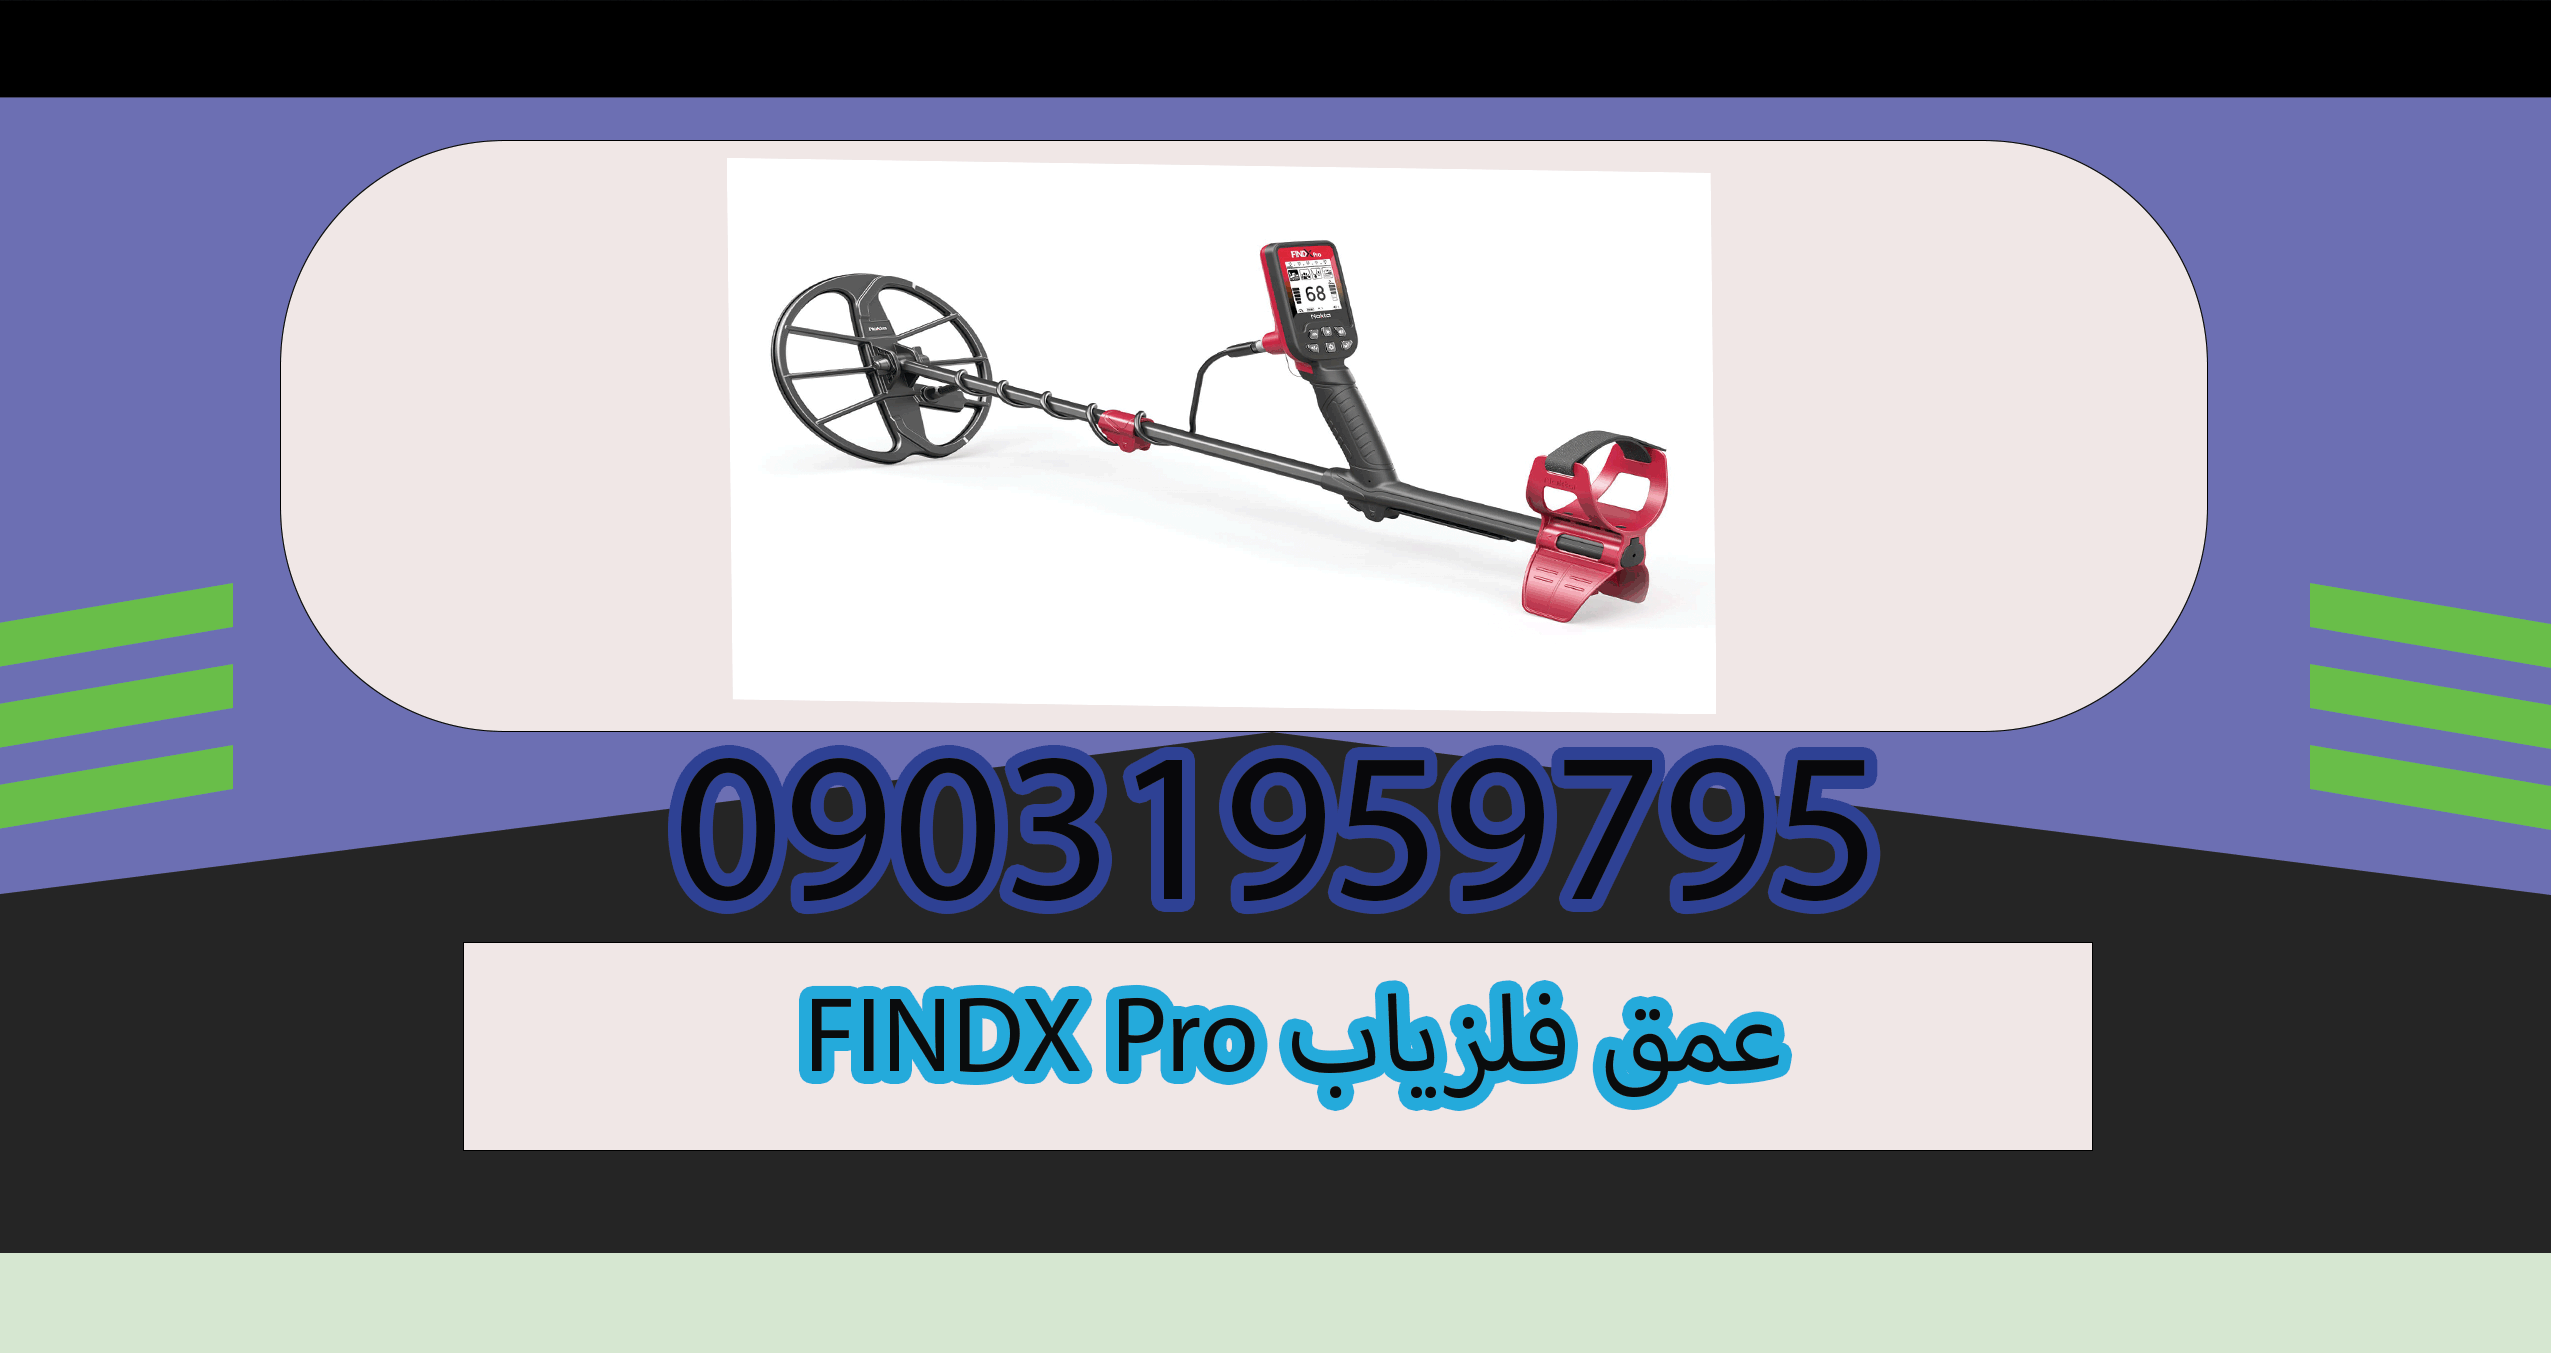 FINDX Pro